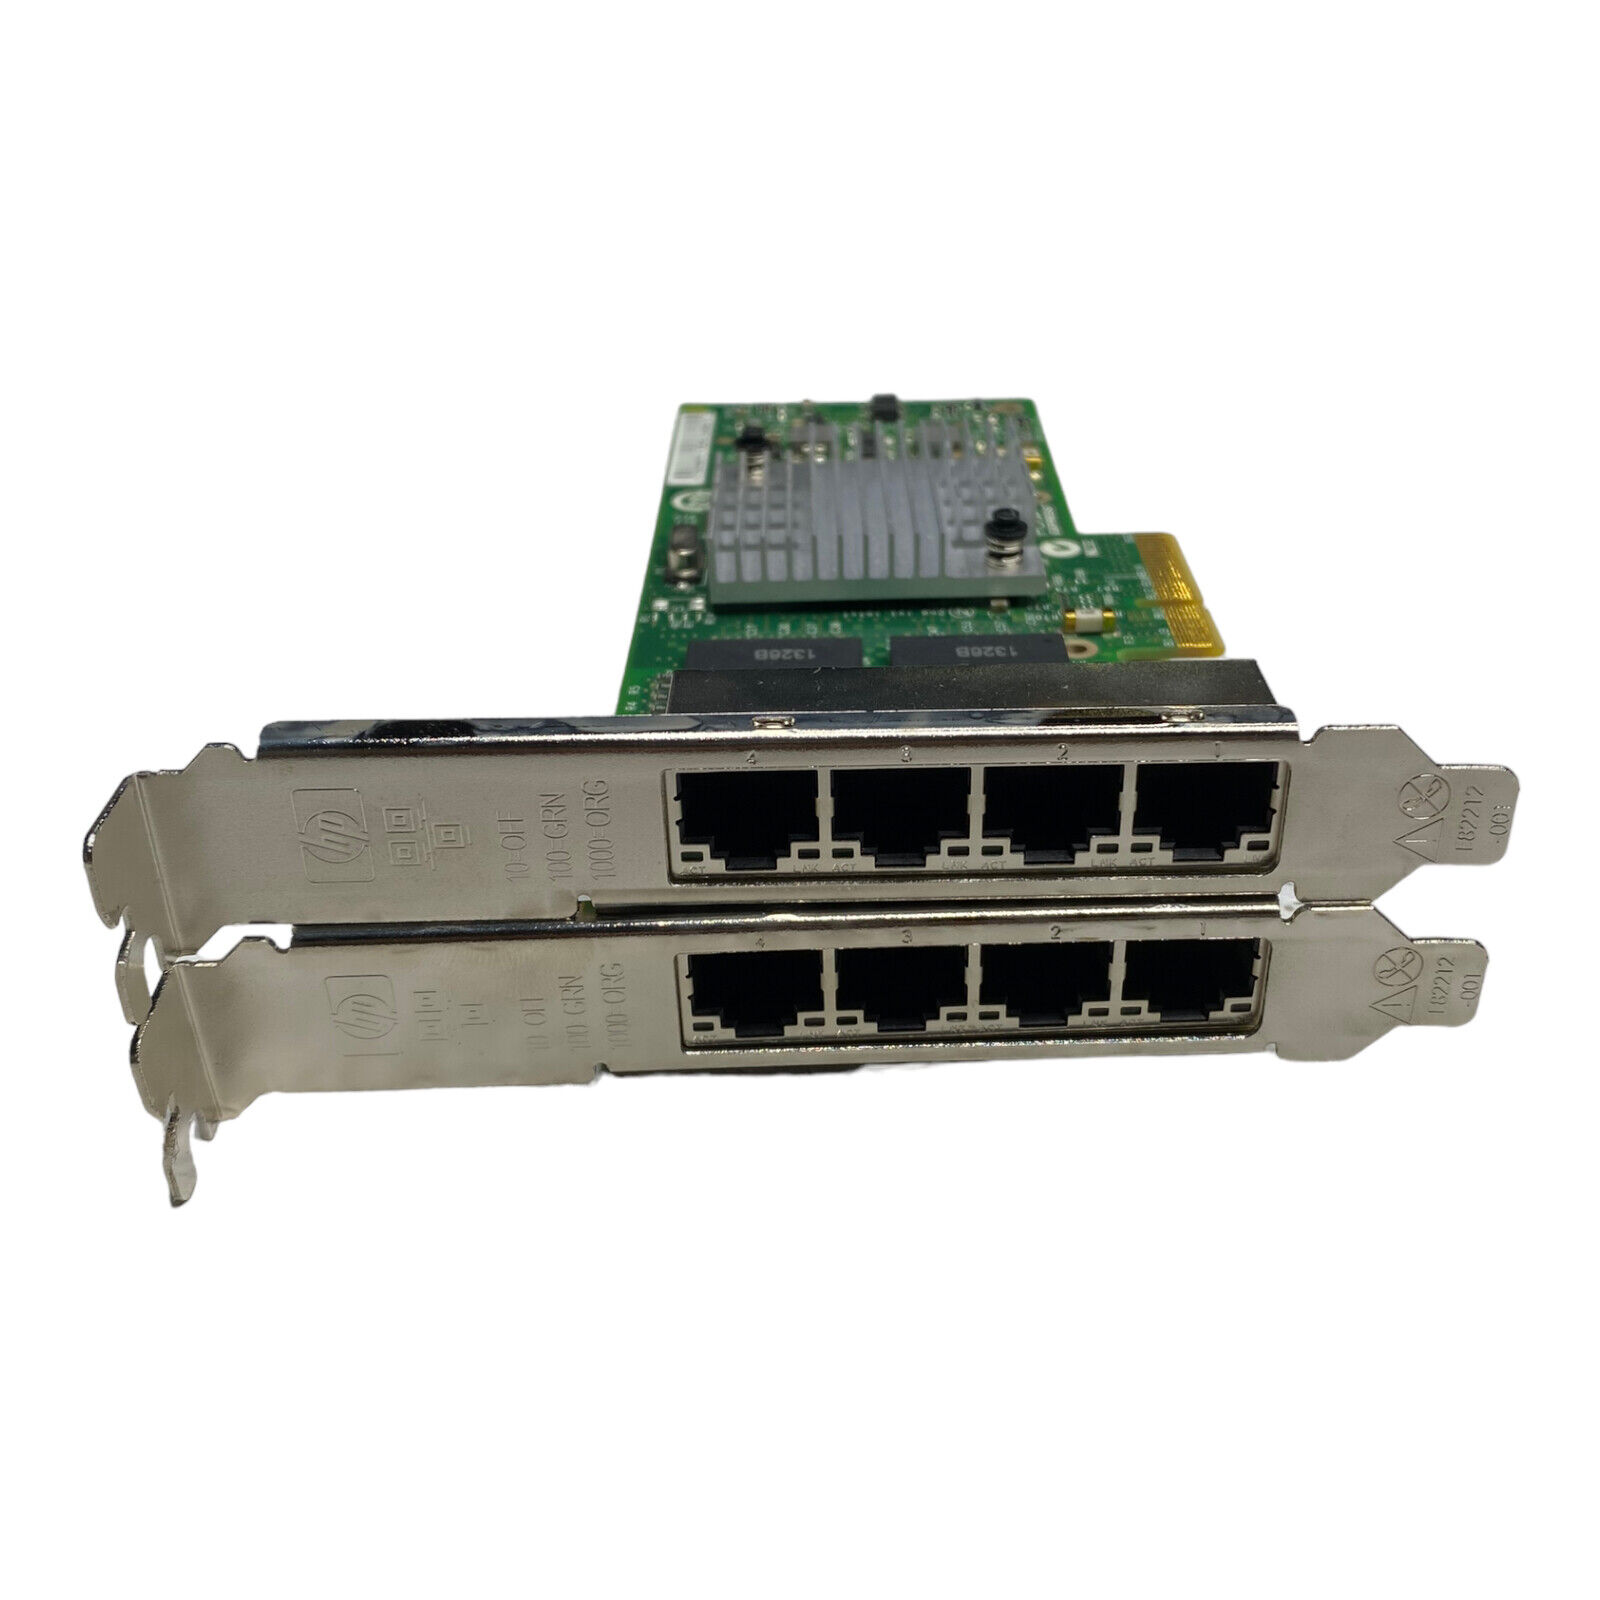 Set of 2 HP NC365T 4 Port PCIe Ethernet Server Adapter